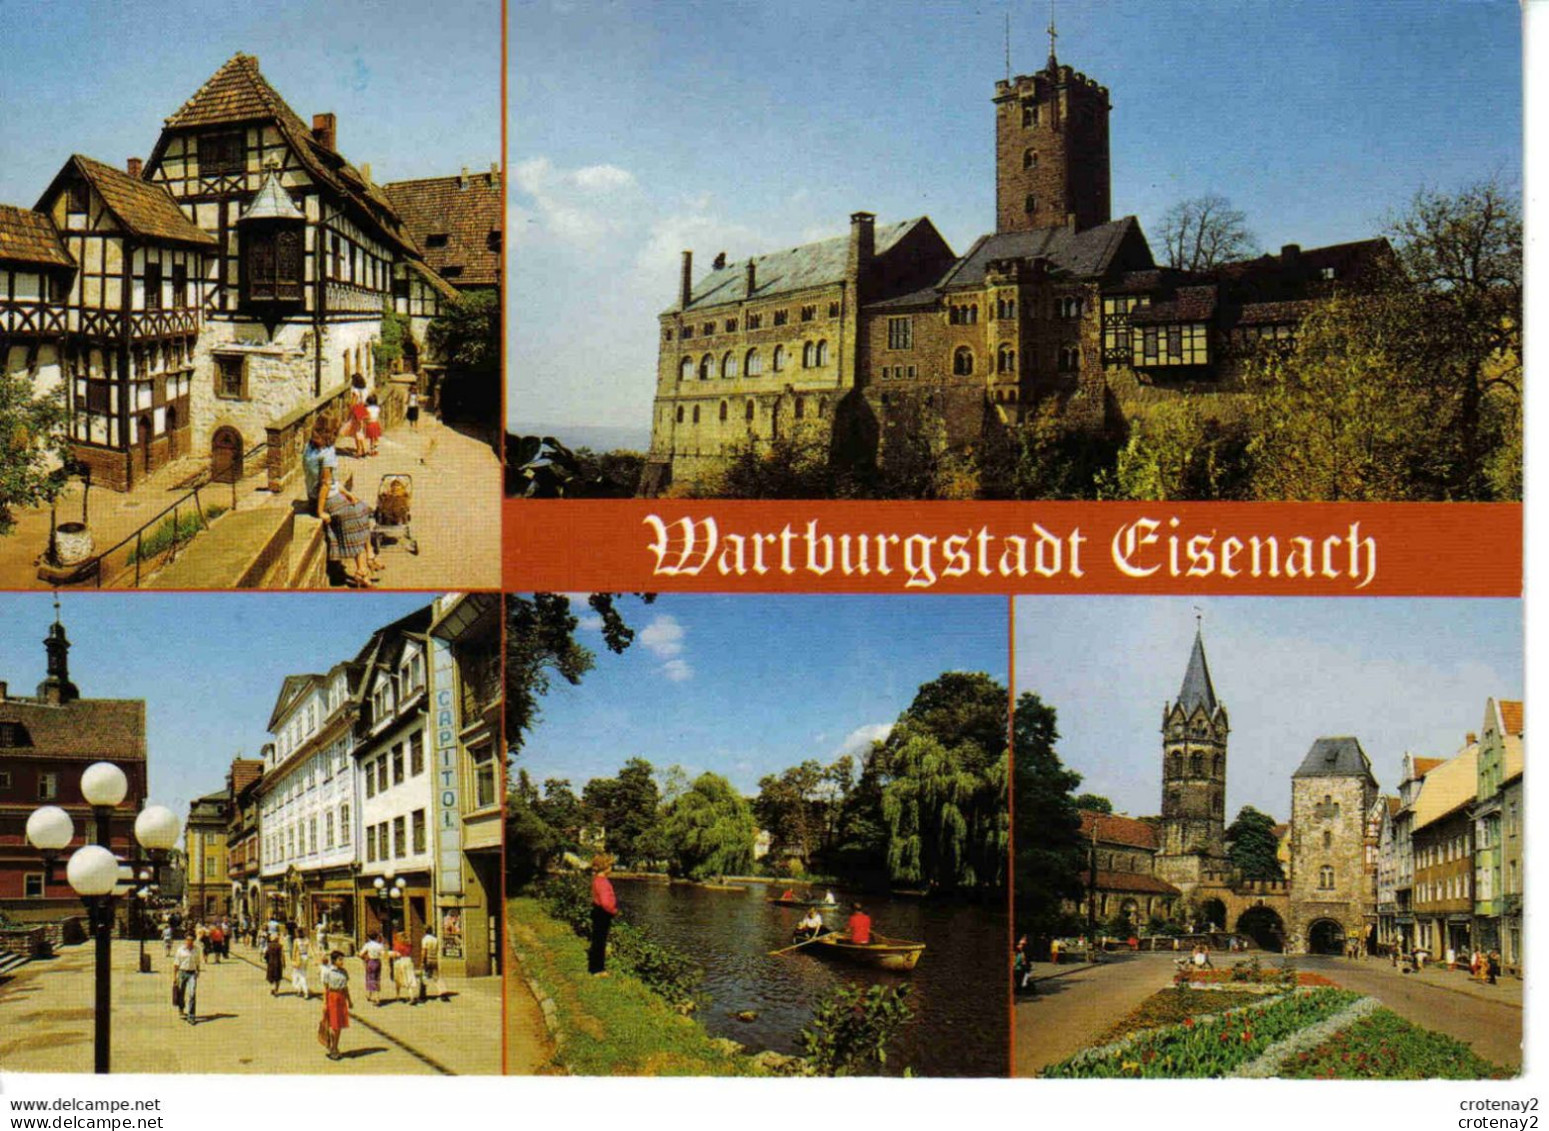 WARTBURG Stadt Eisenach 5 Vues Animée Auslese Bild Verlag Barque Poussette Enseigne Capitol VOIR DOS - Warburg